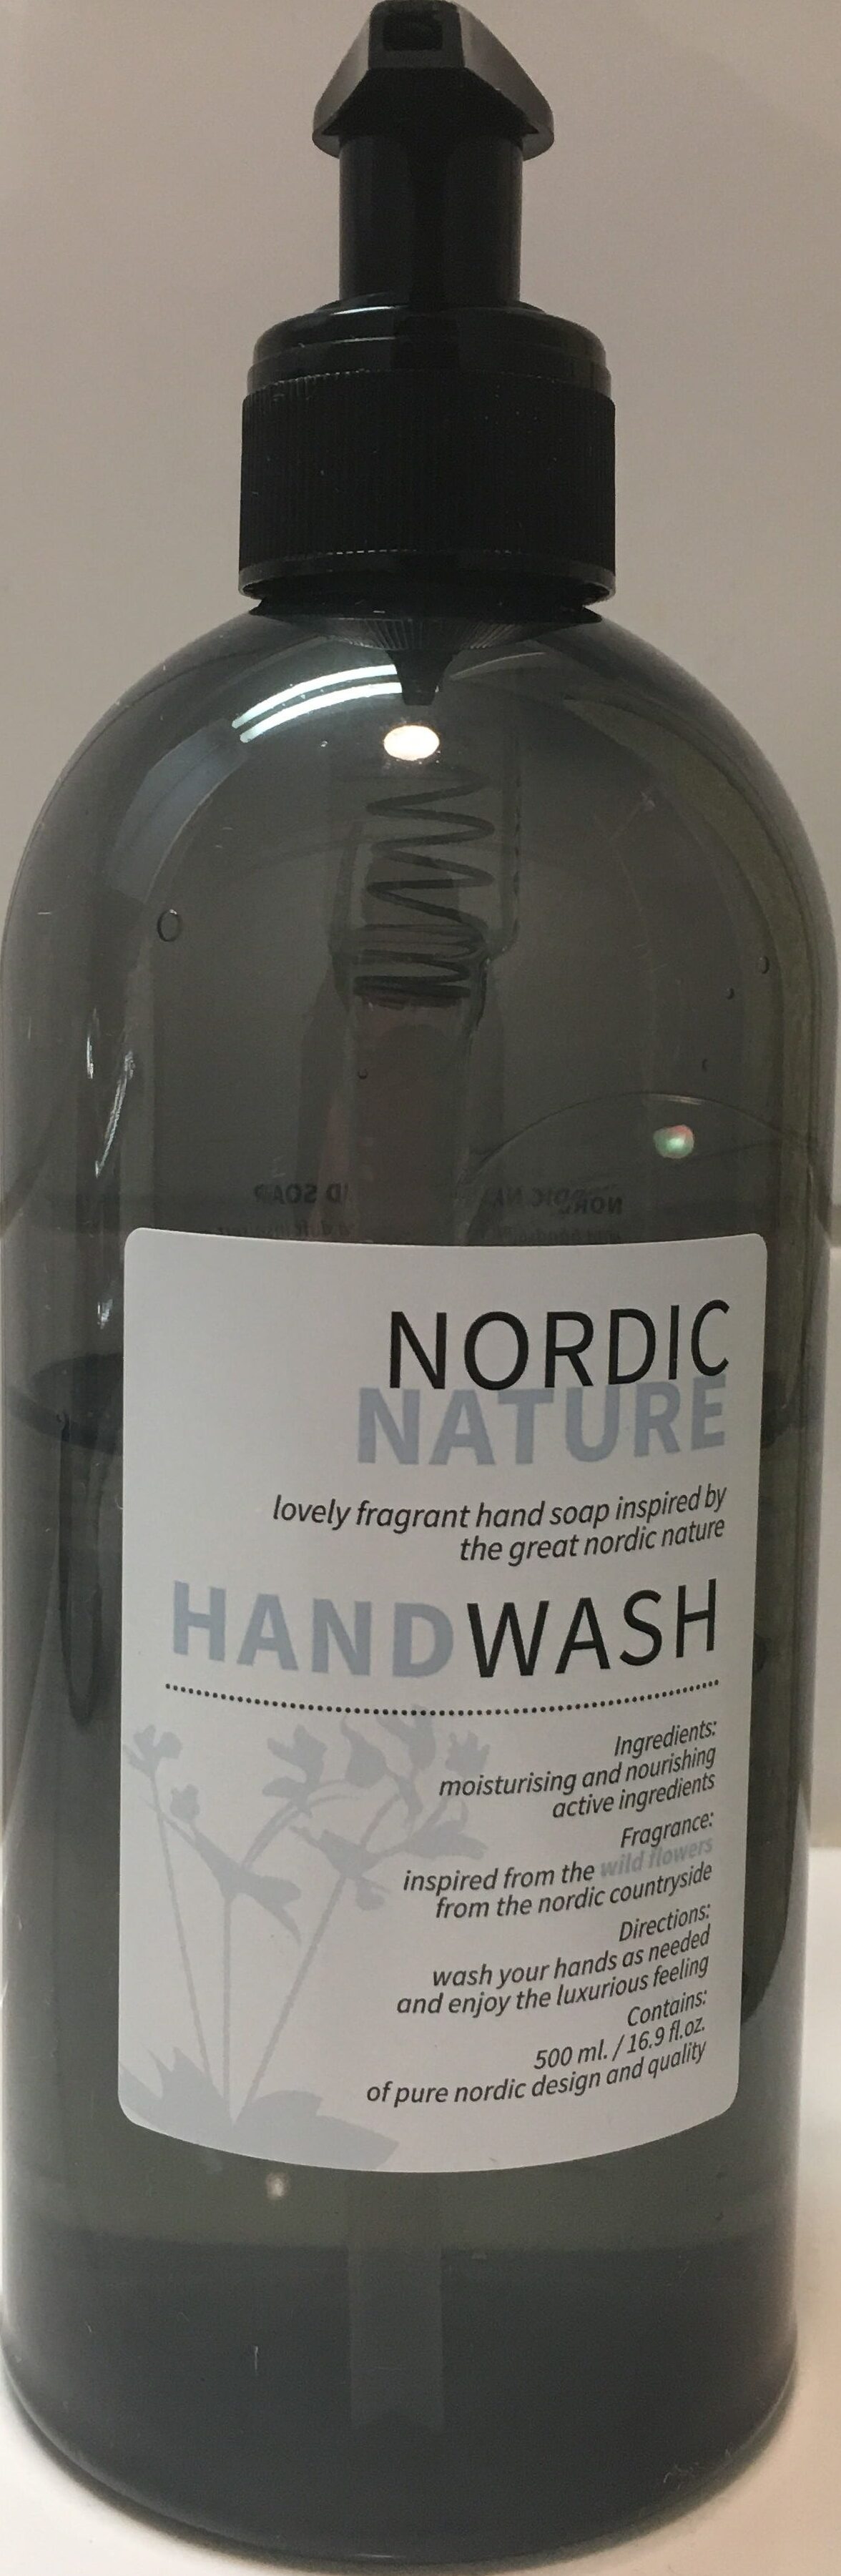 Hand Wash - Product - en